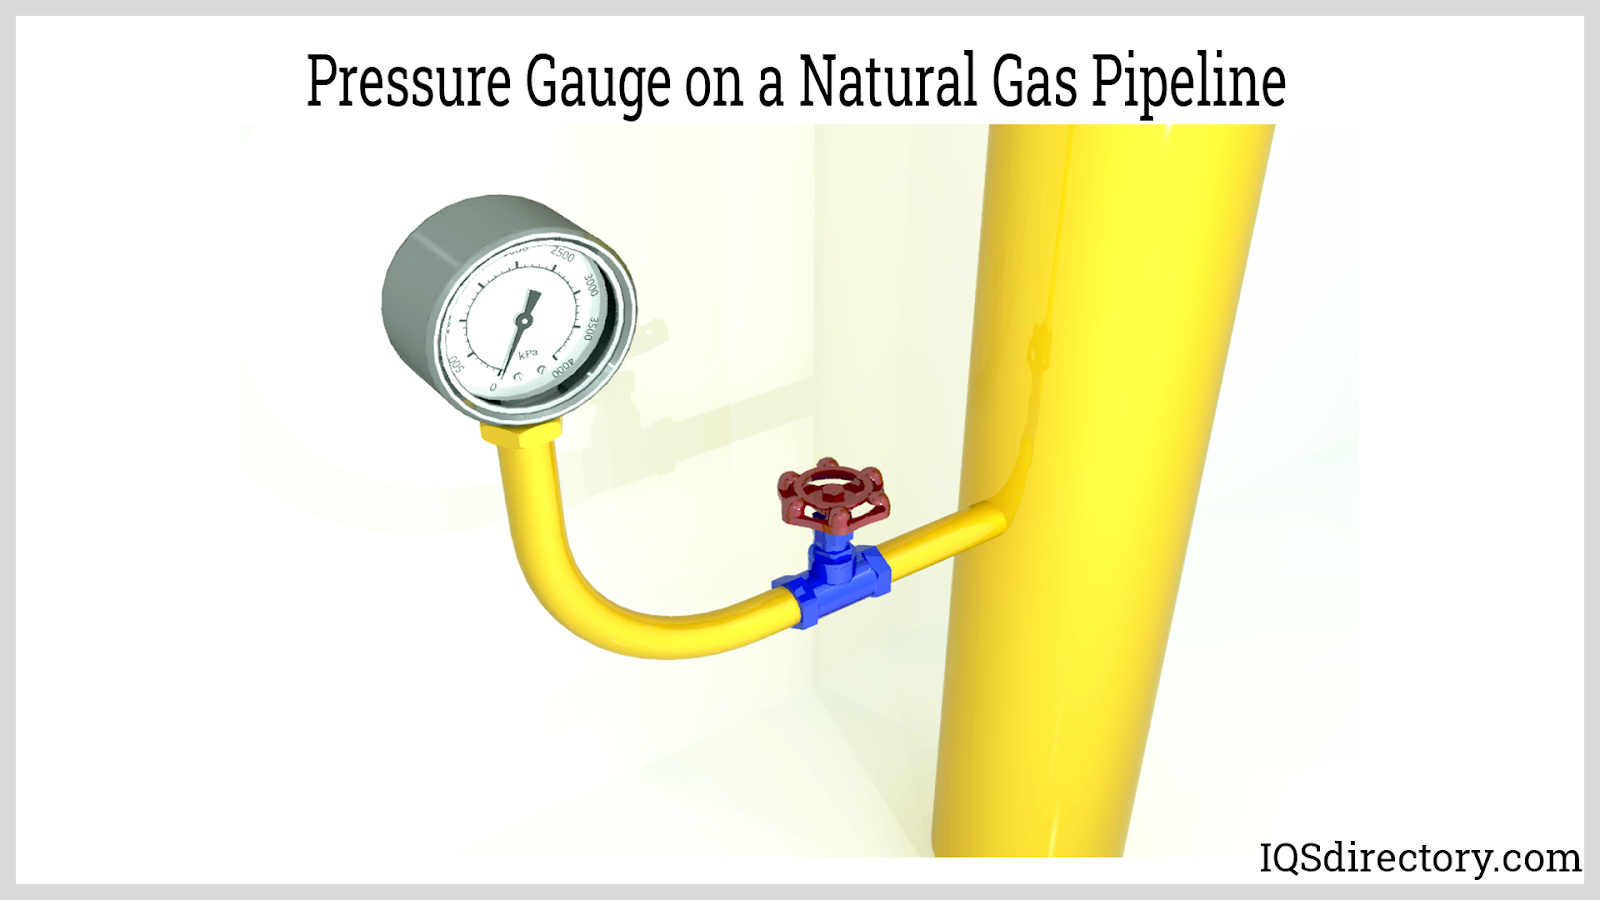 Pressure Gauge on a Natural Gas Pipeline